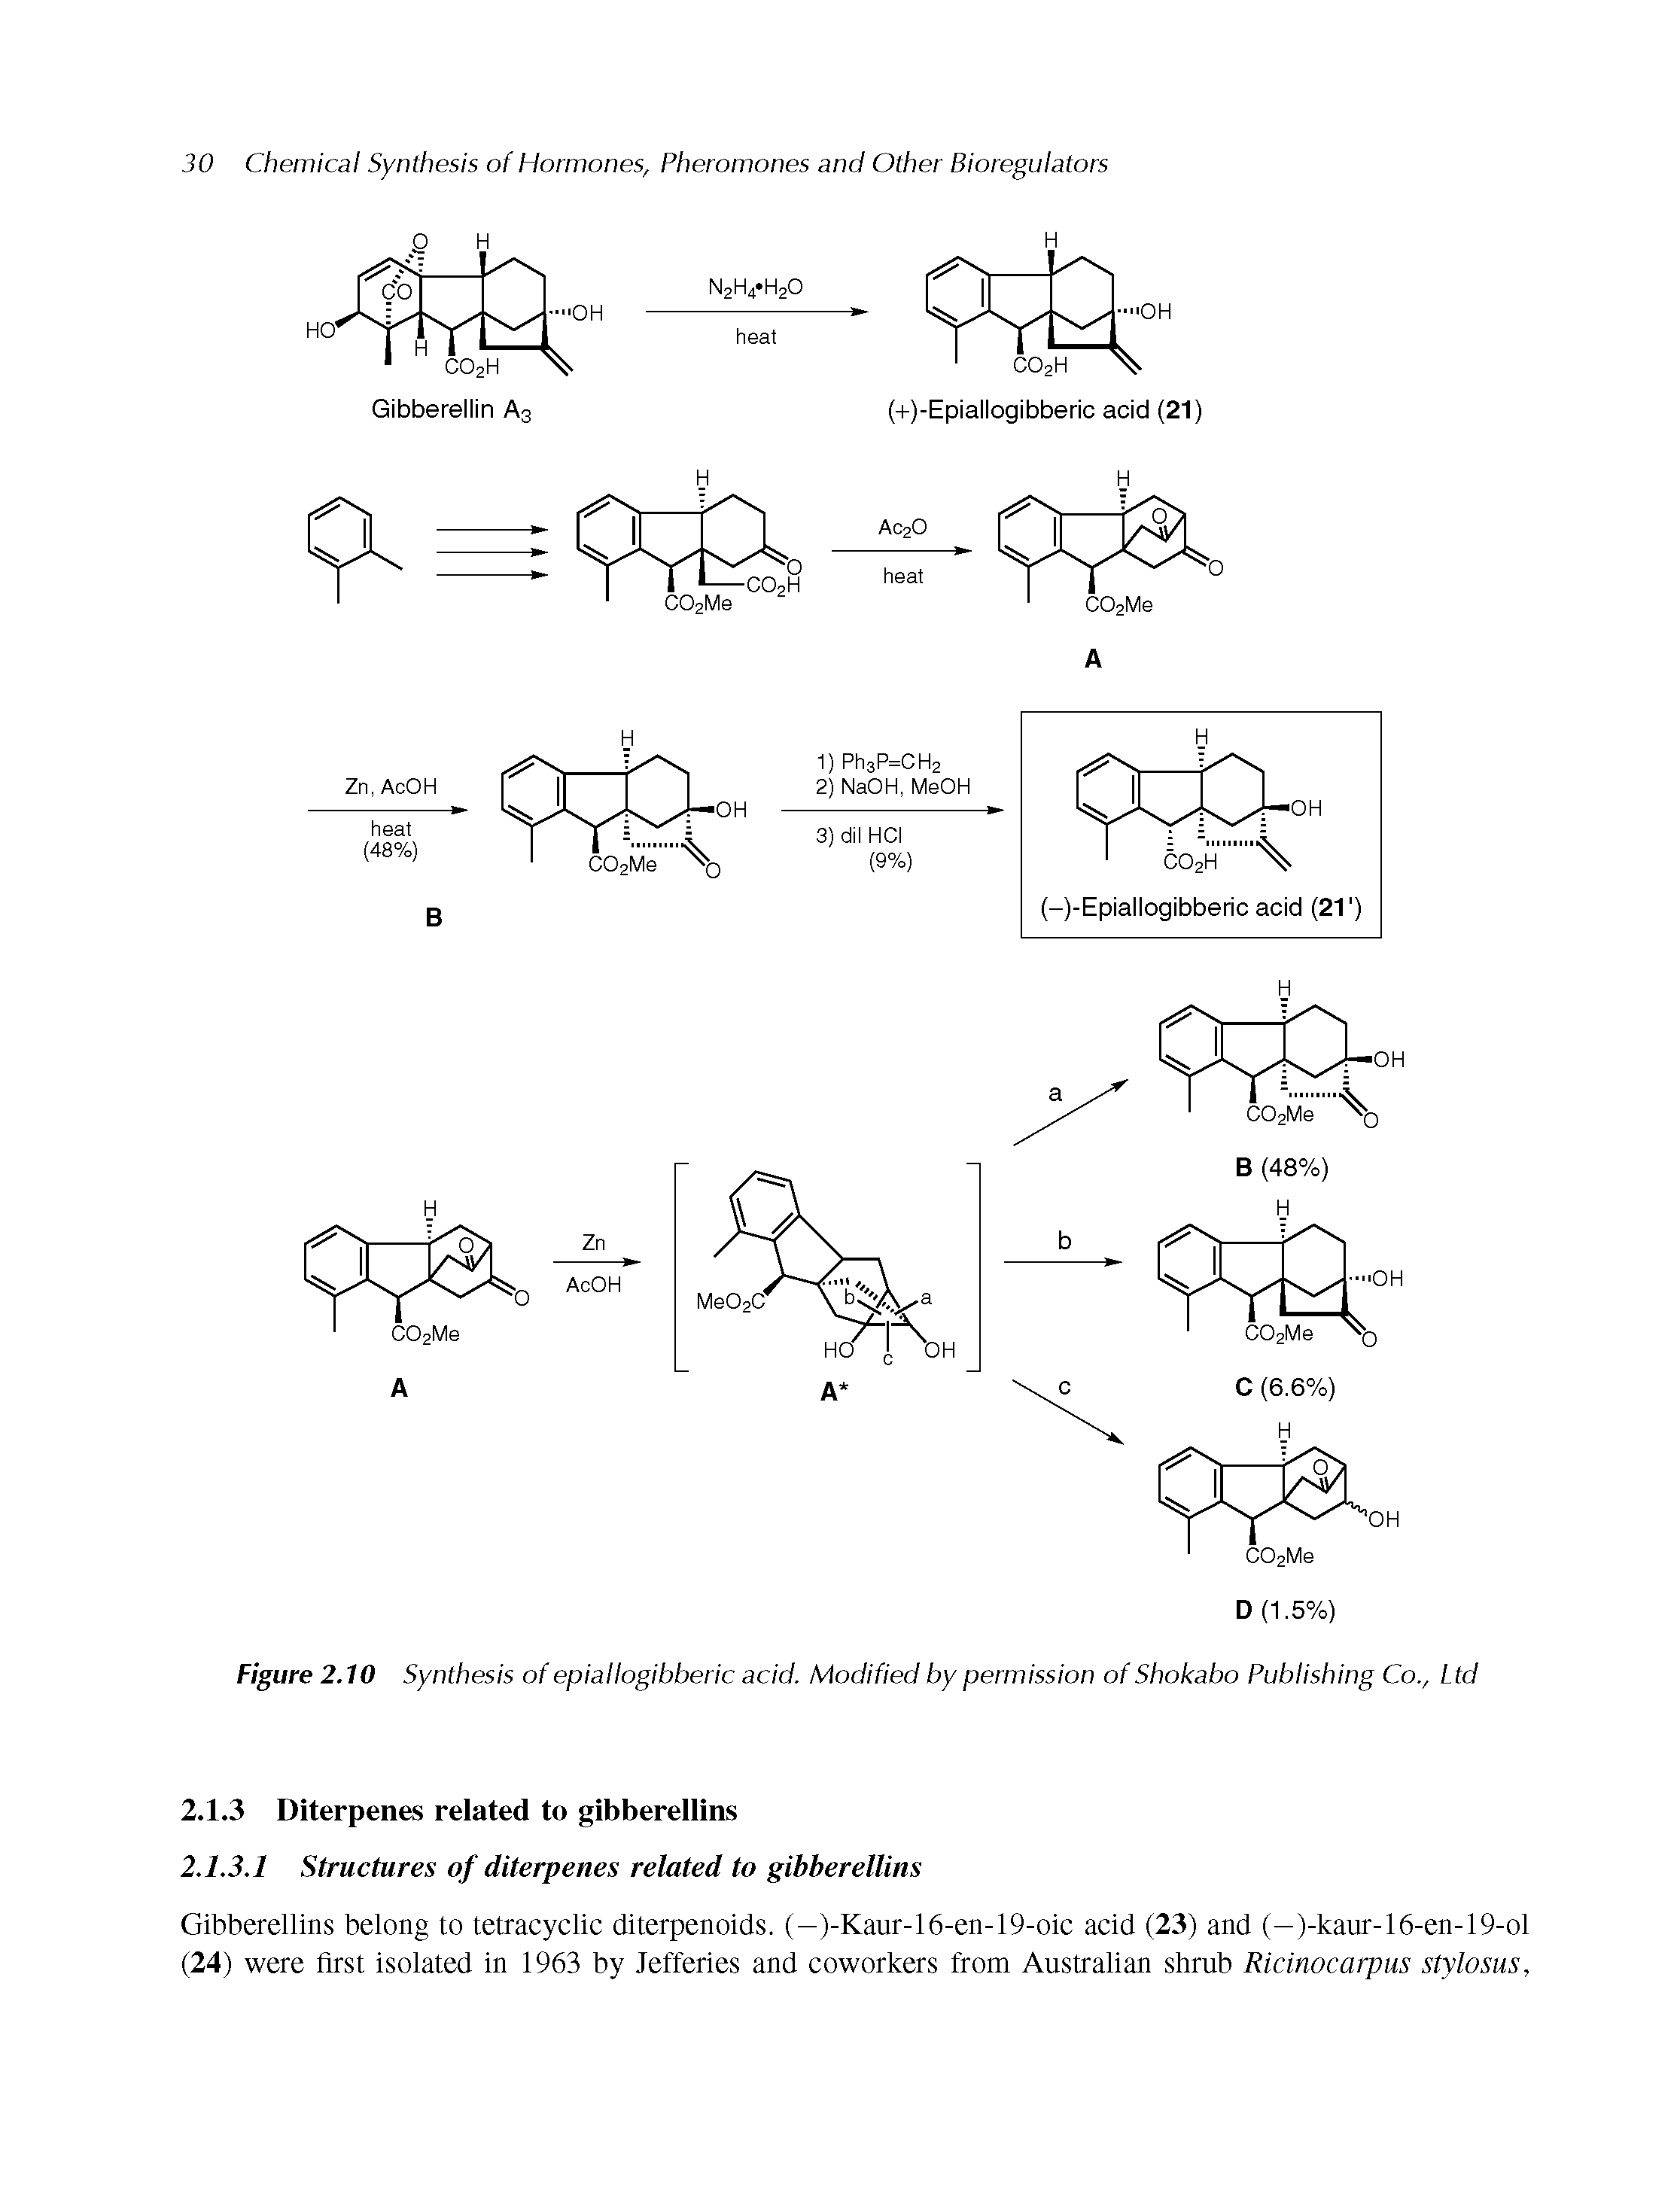 Figure 2.10 Synthesis of epiallogibberic acid. Modified by permission of Shokabo Publishing Co., Ltd...